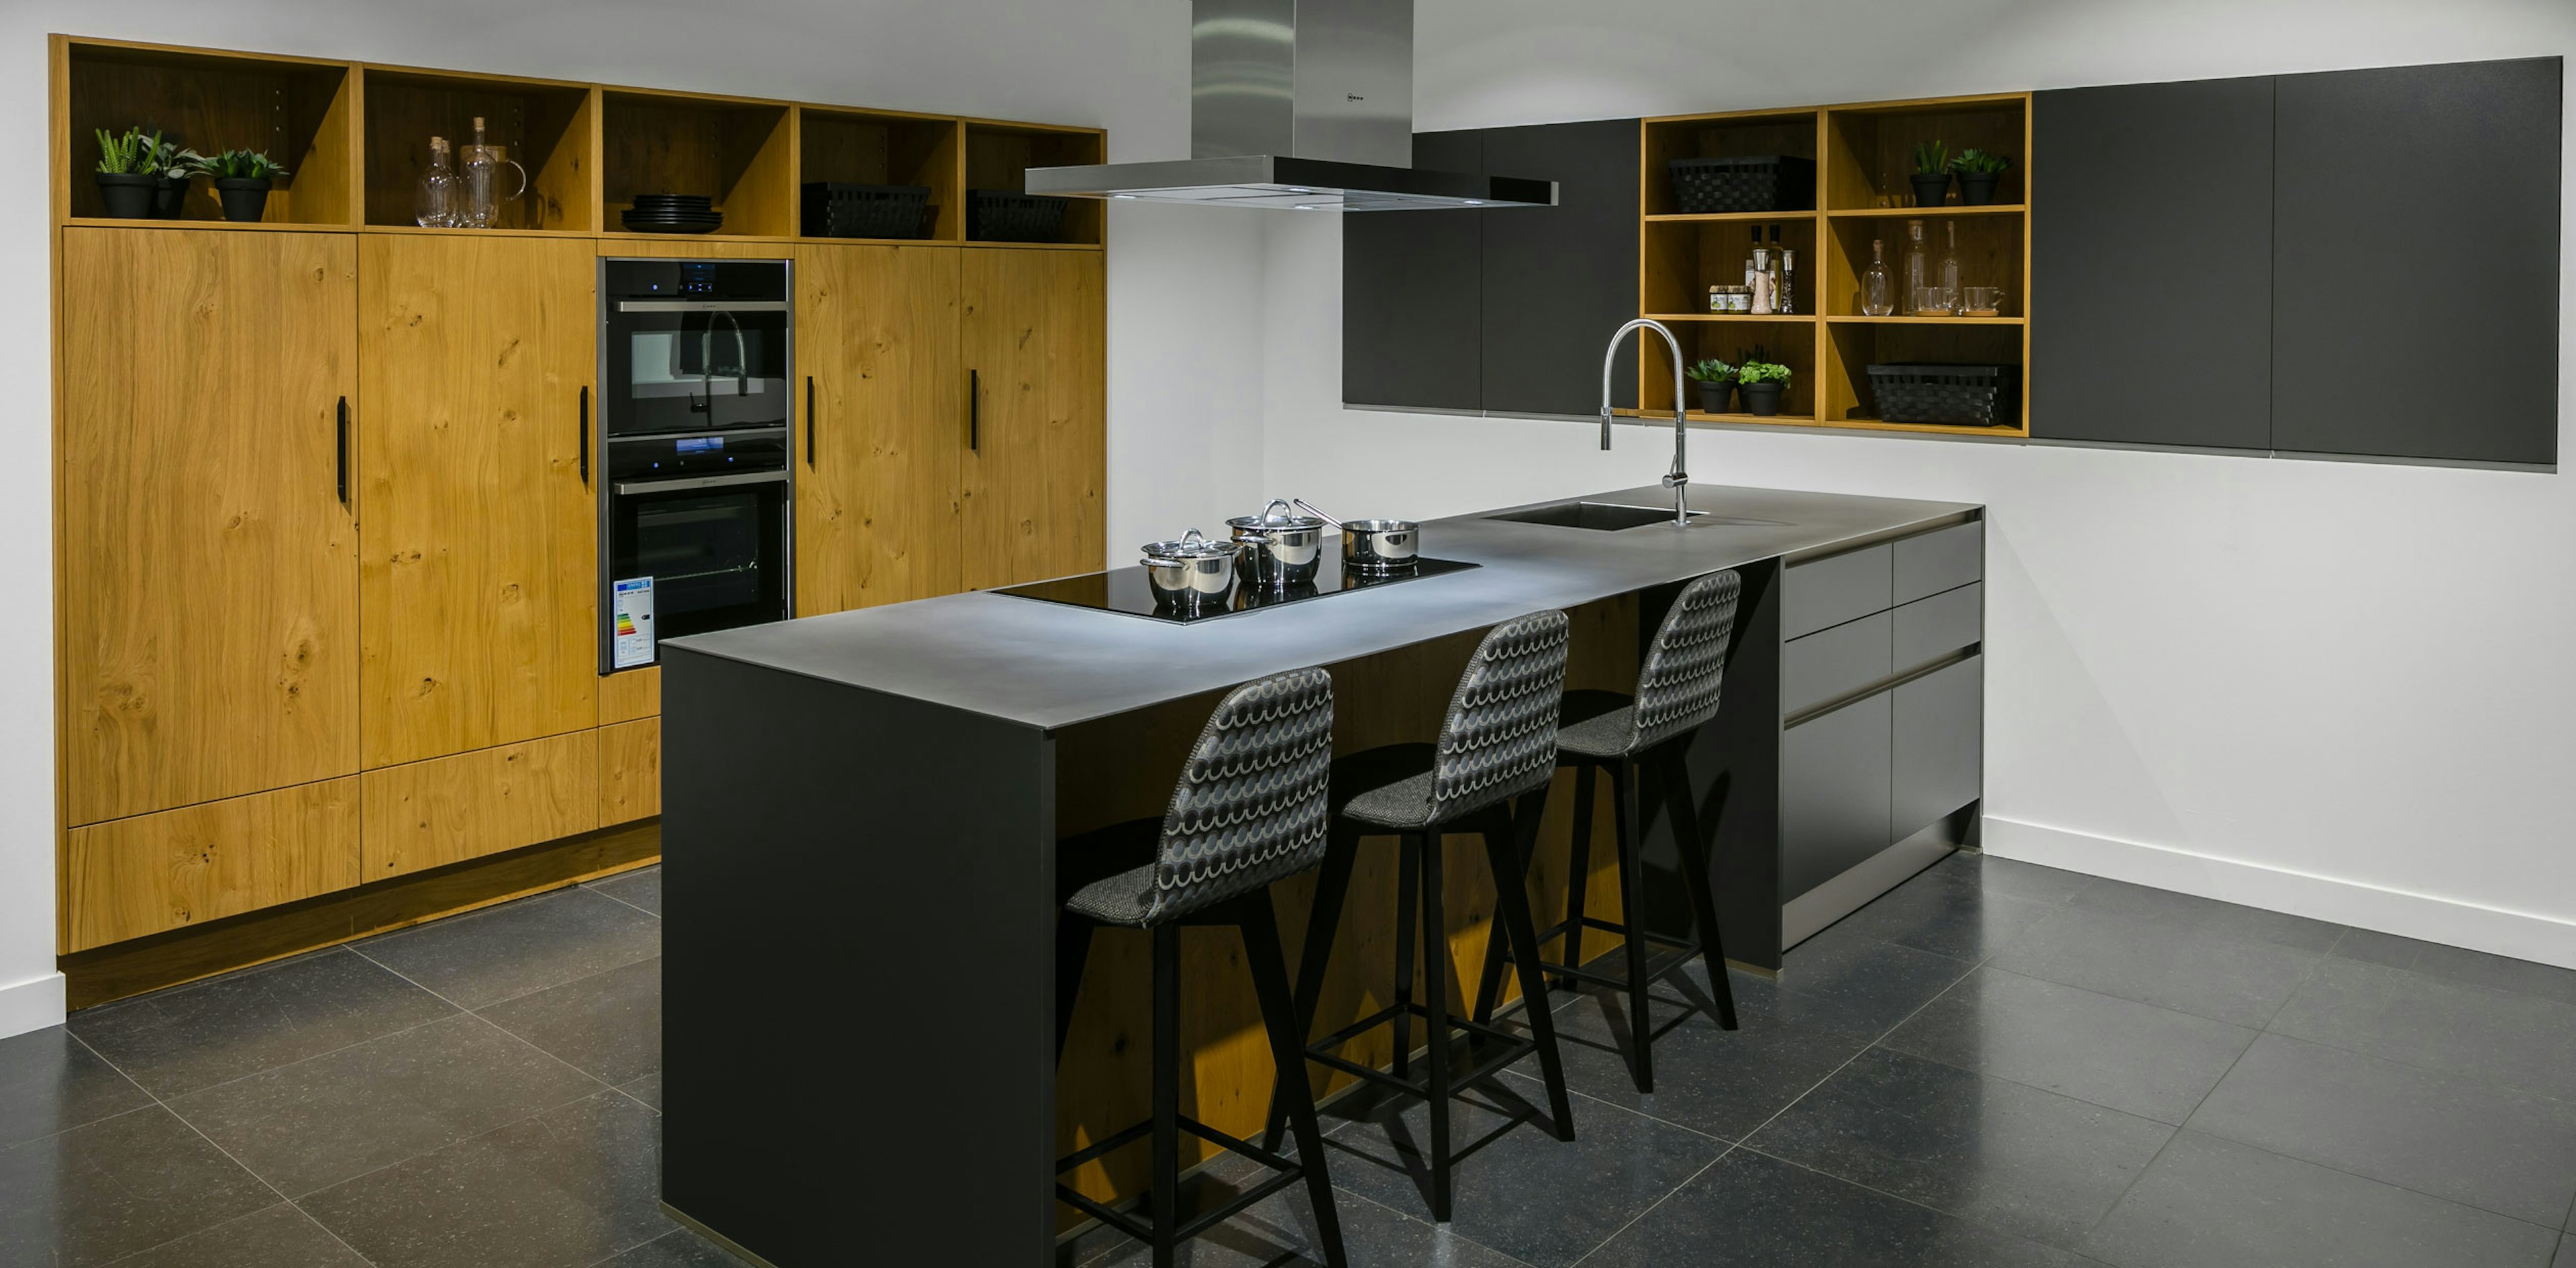 Opstand vingerafdruk ruimte Keuken met bar | Bemmel & Kroon keukens